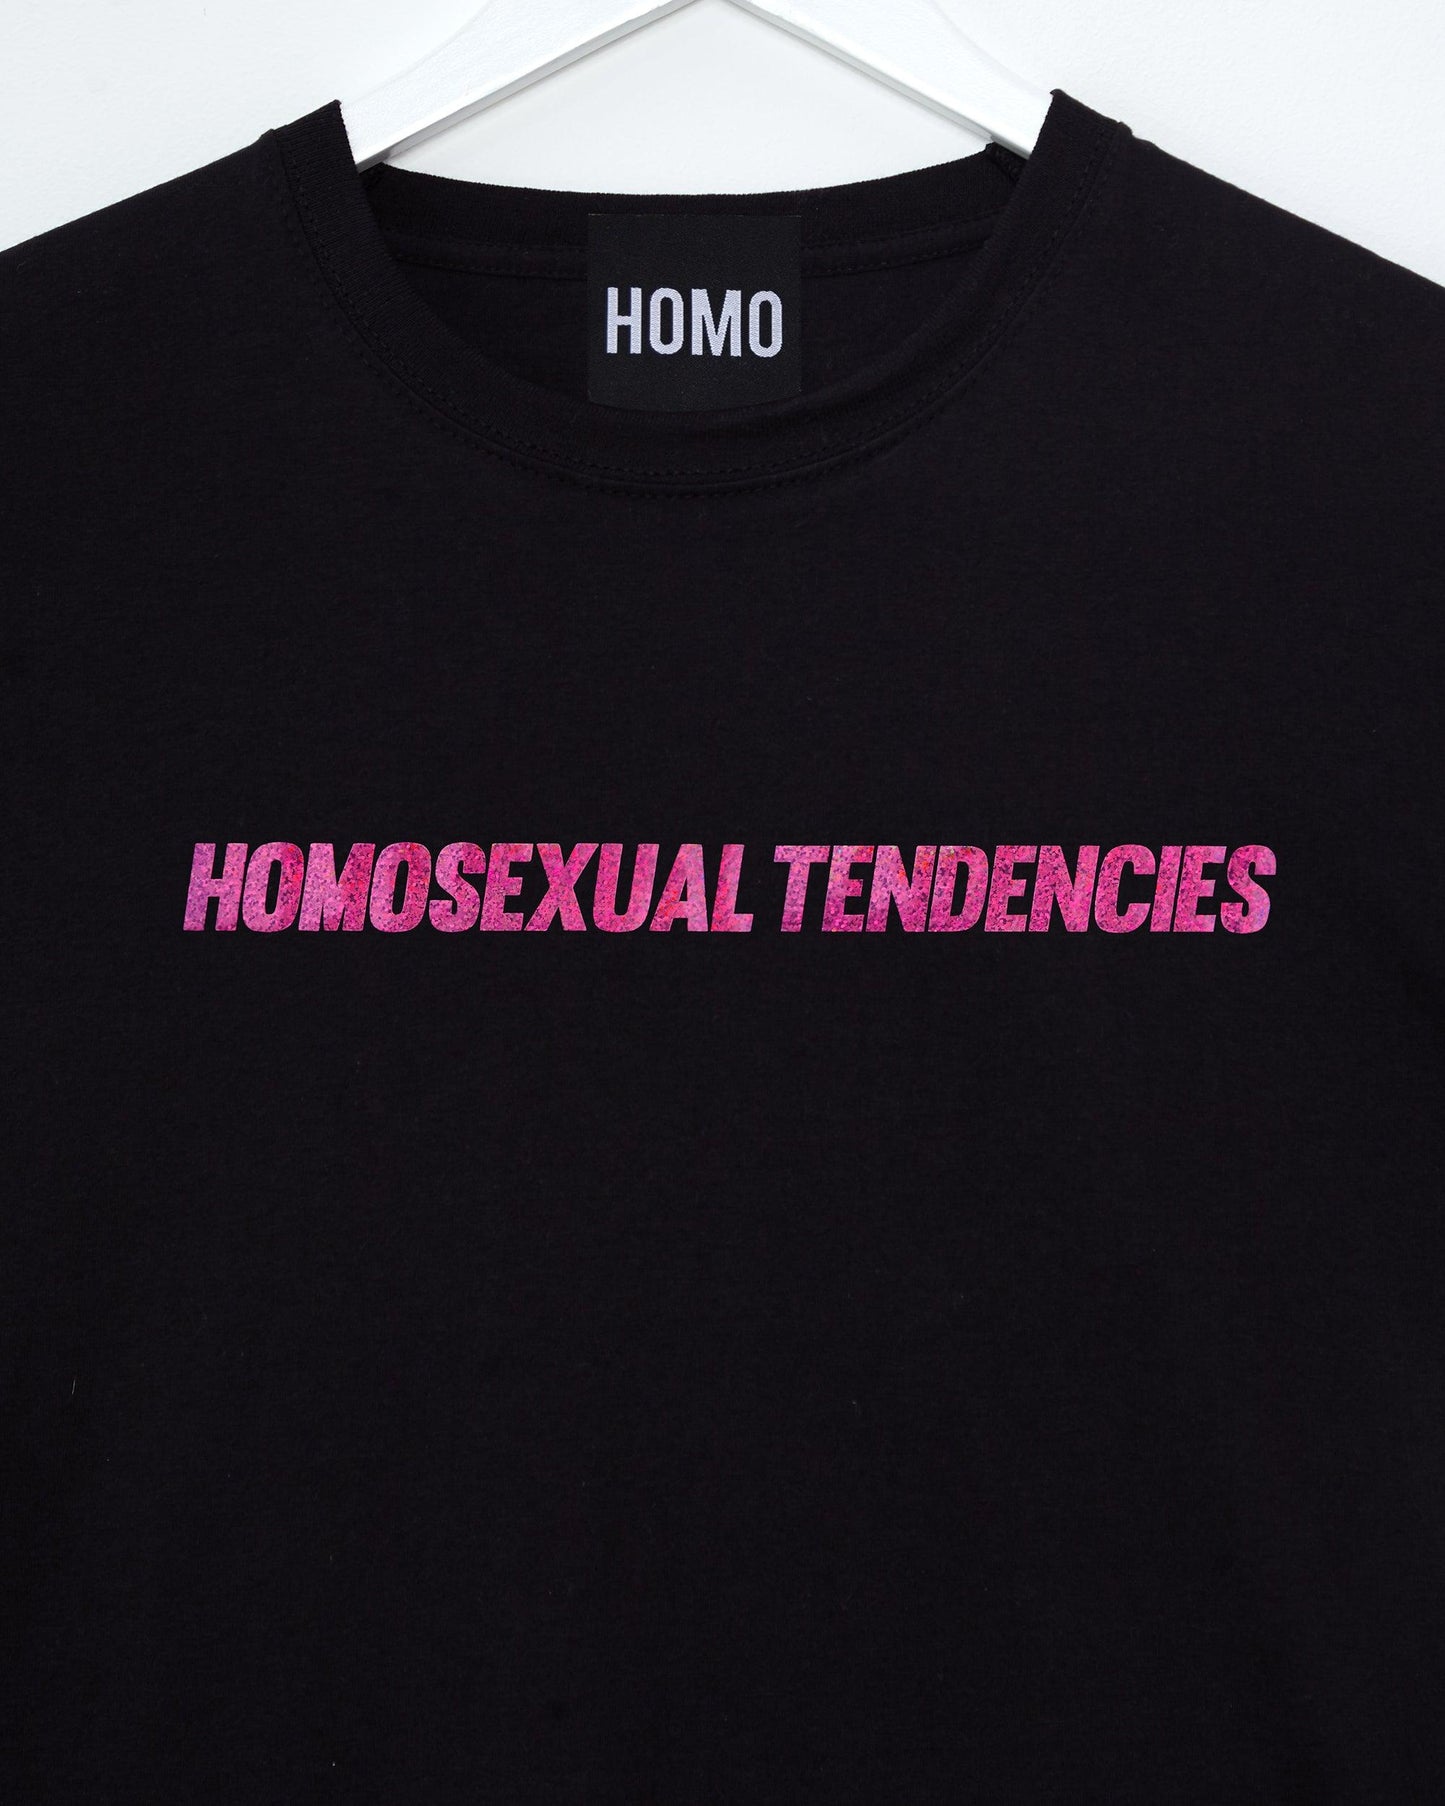 Homosexual Tendencies Tee - Pink Sparkle on Black - HOMOLONDON